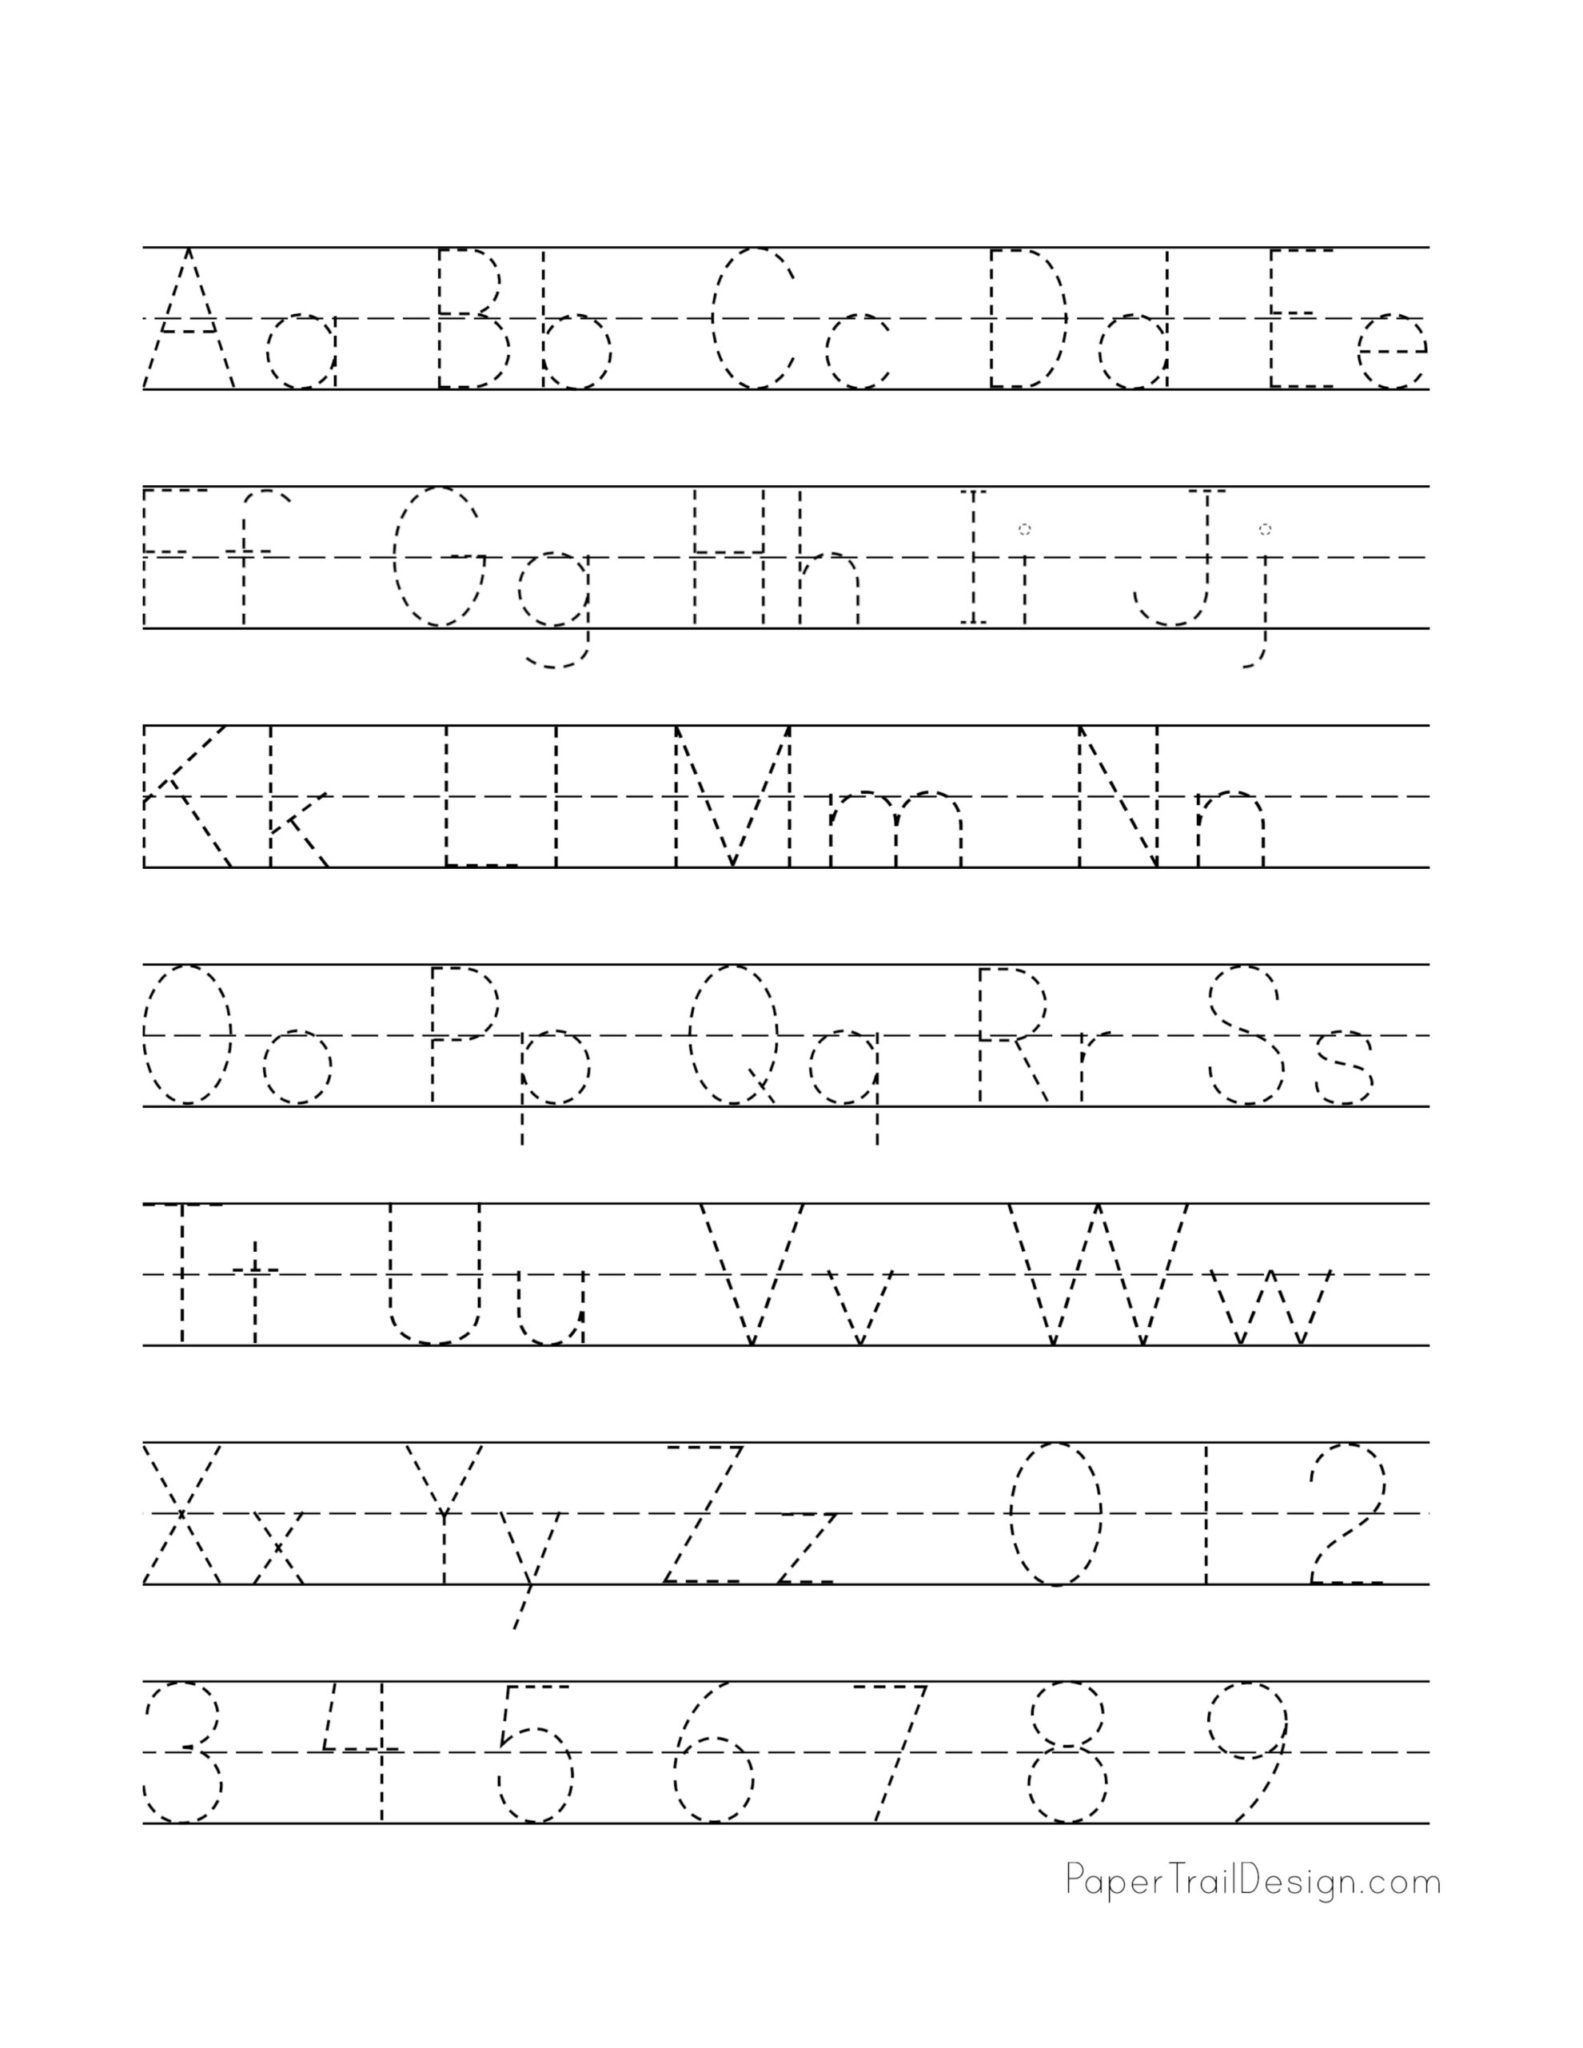 Free Printable Alphabet Handwriting Practice Sheets | Printable Crossword Puzzles, Bingo Cards